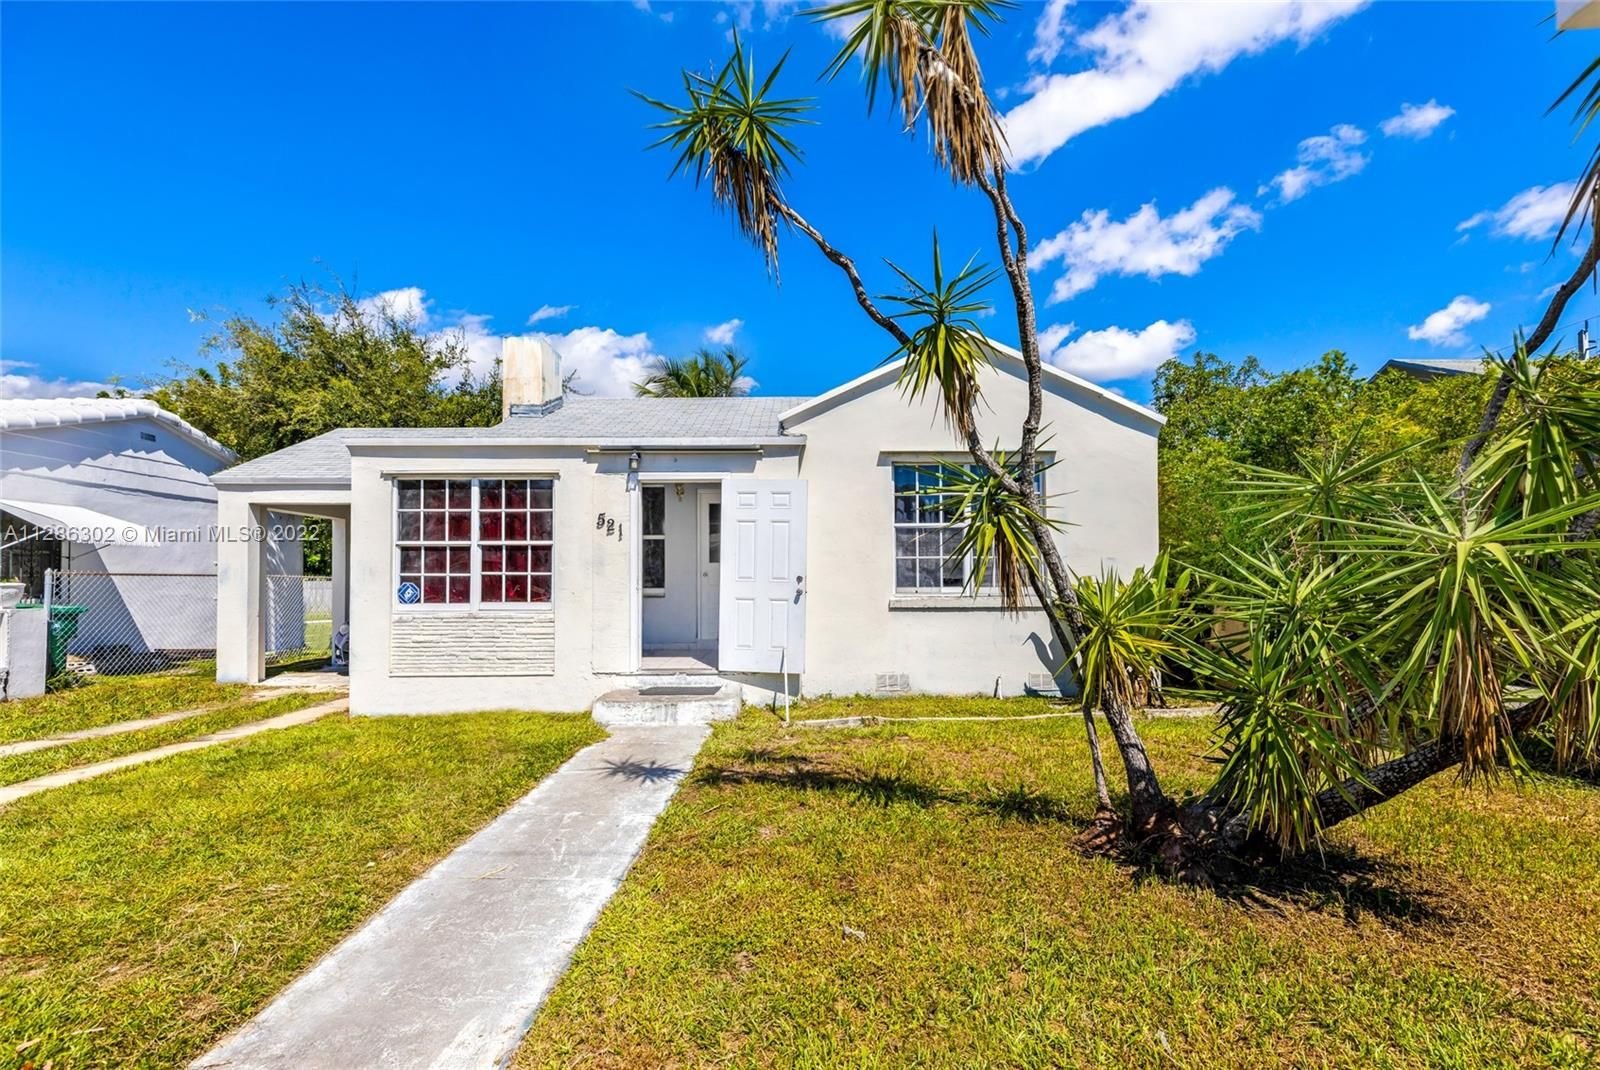 Real estate property located at 521 49th St, Miami-Dade County, Miami, FL